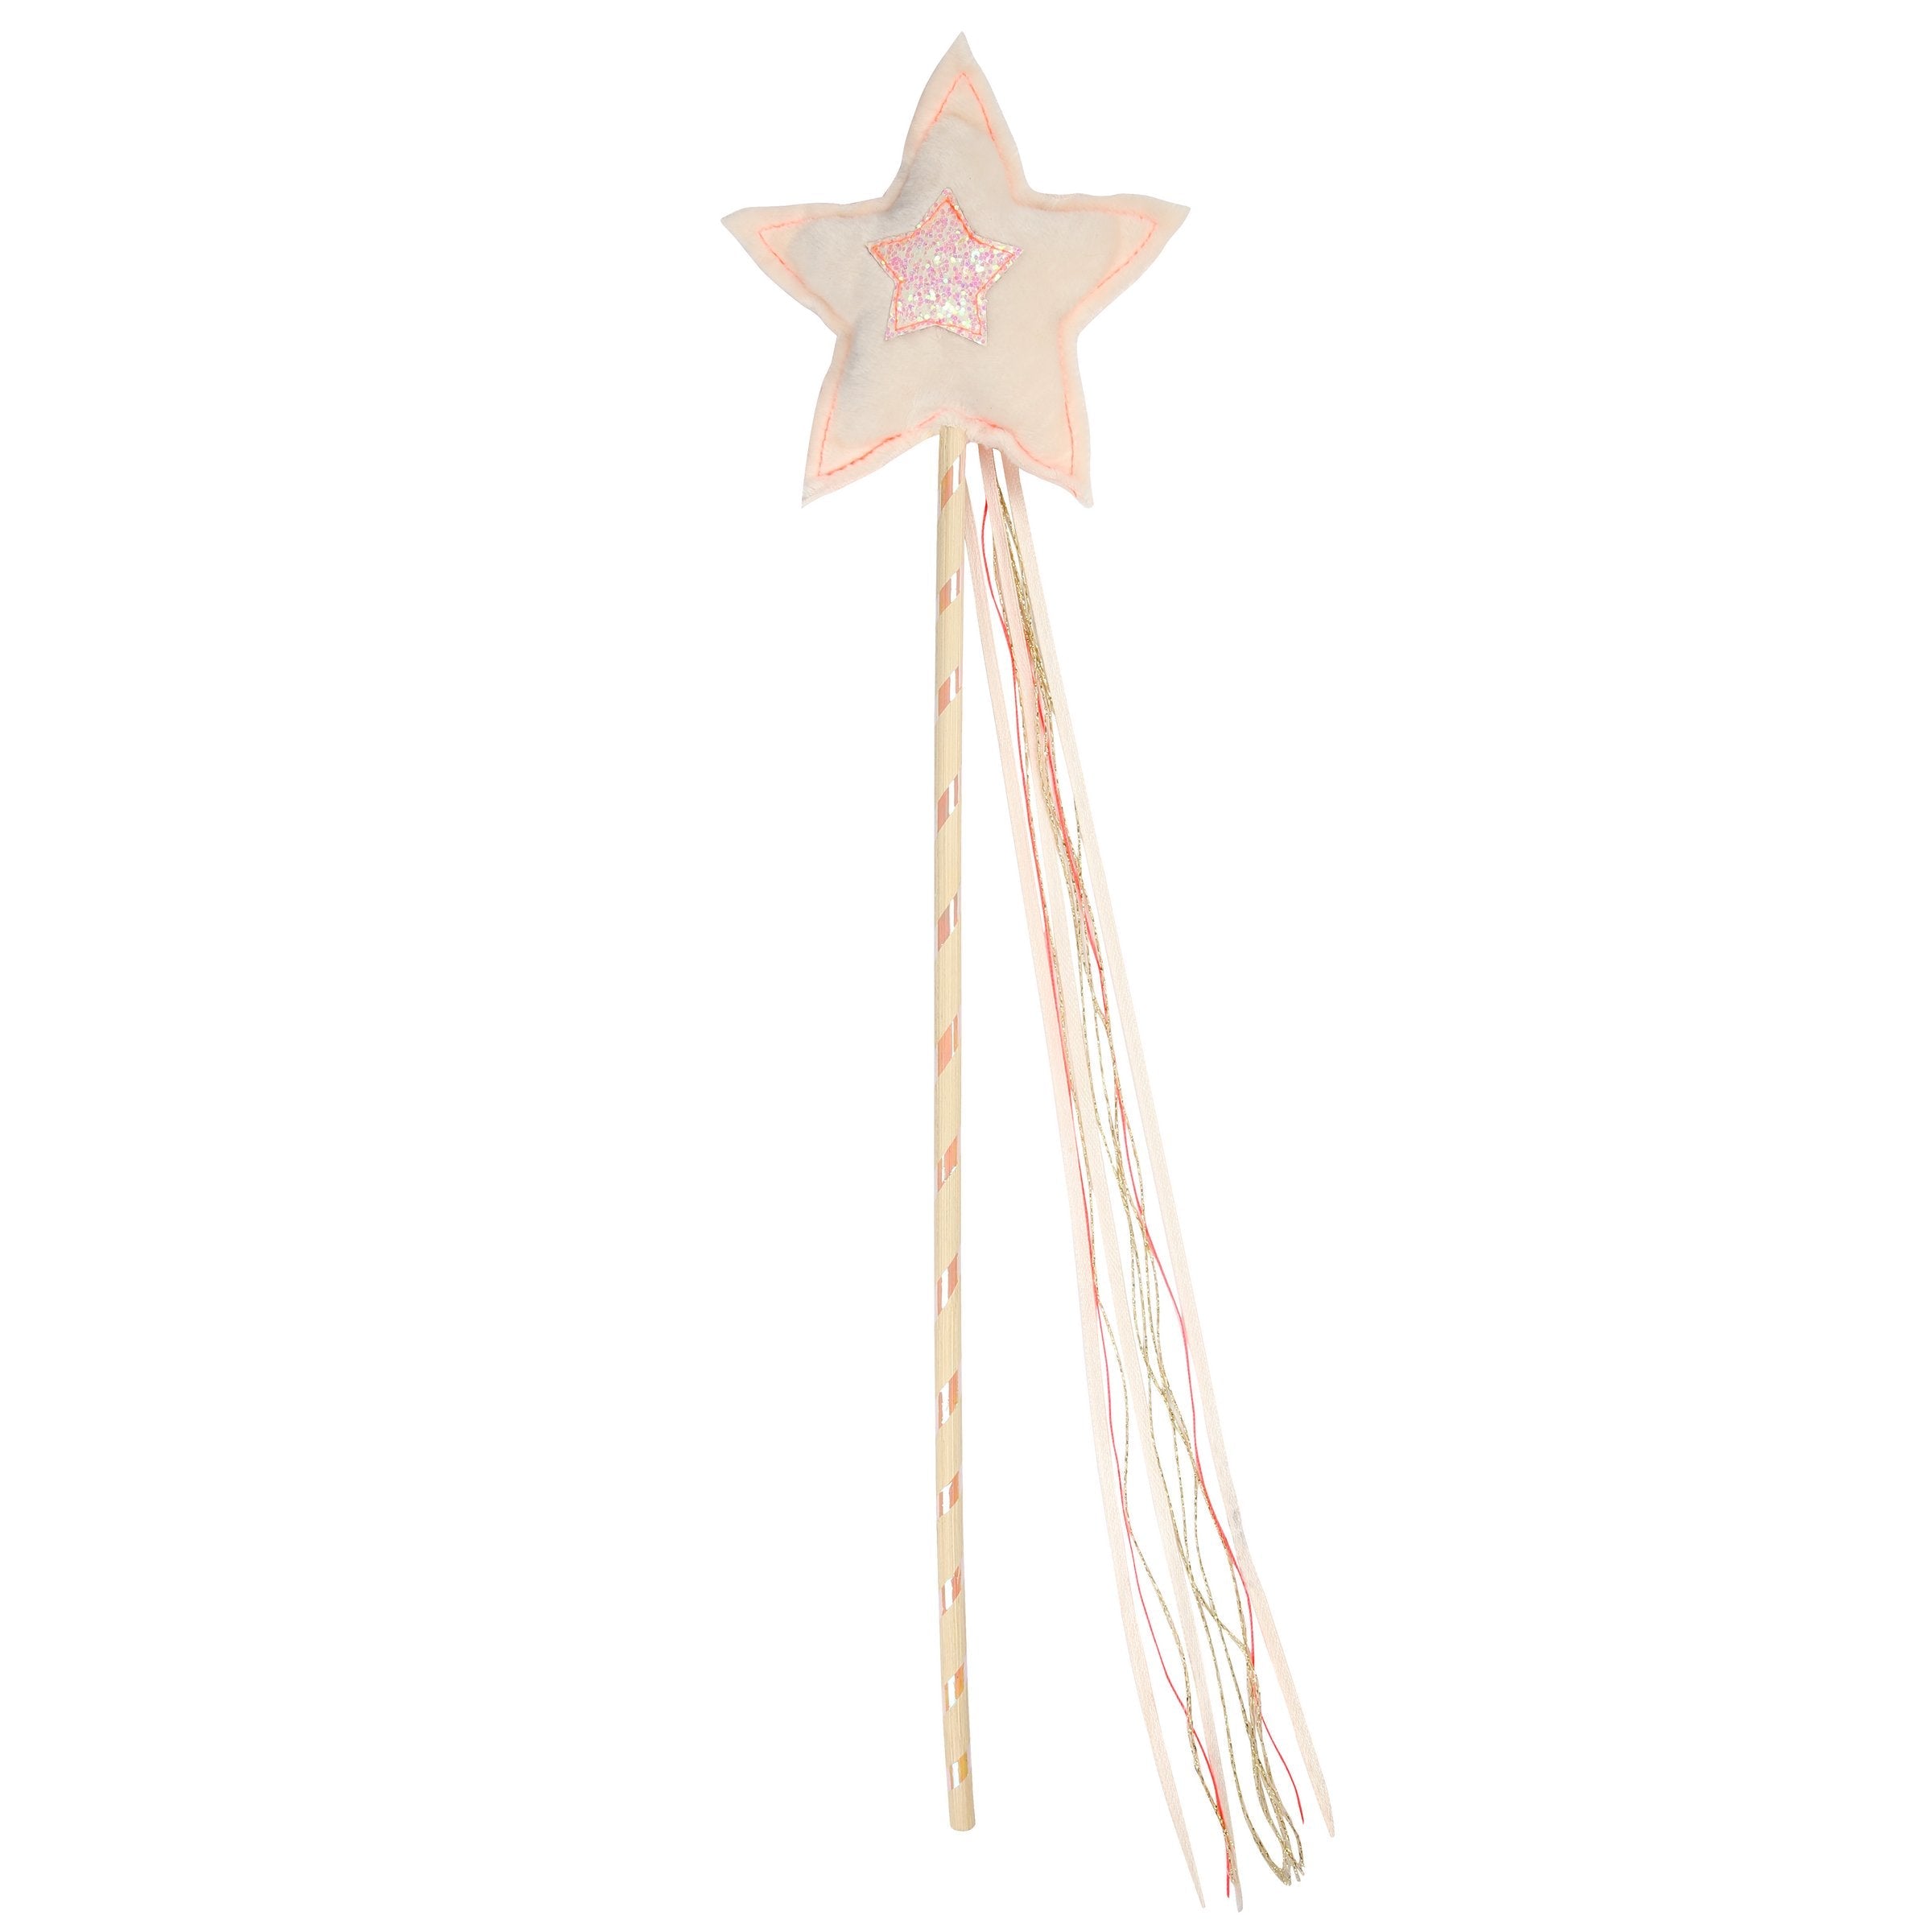 Pink Star Wand